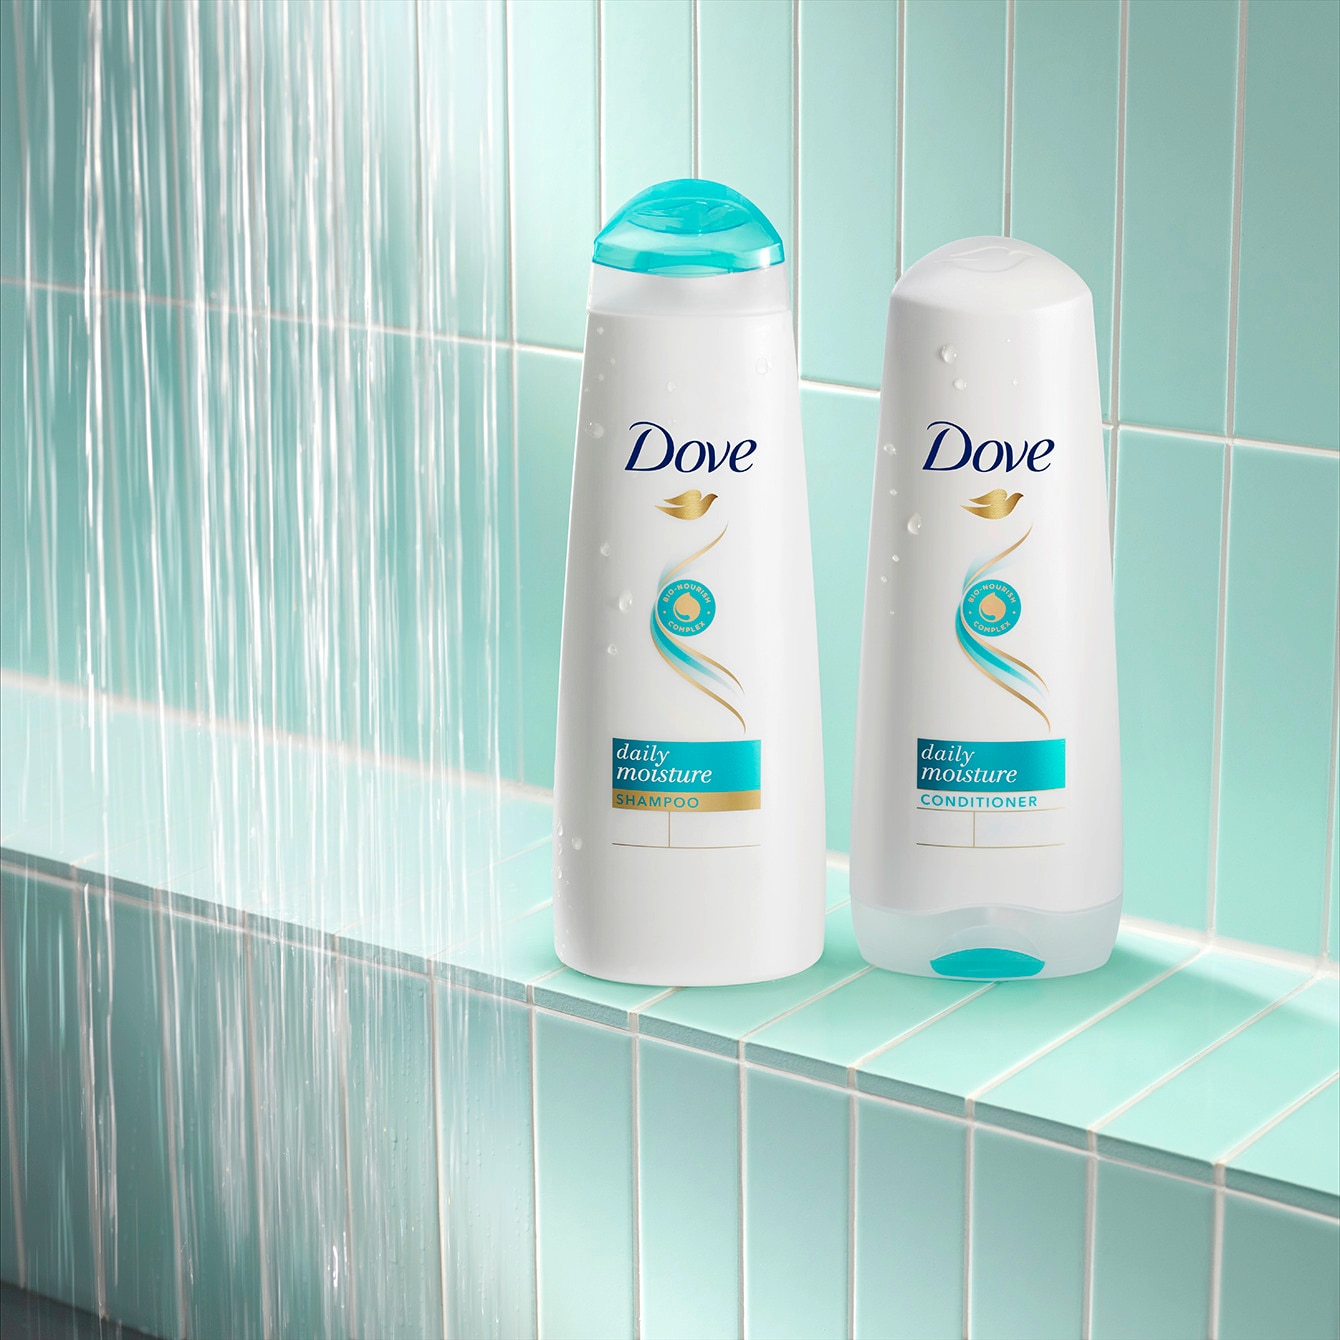 Dove Daily Moisture Shampoo and Conditioner